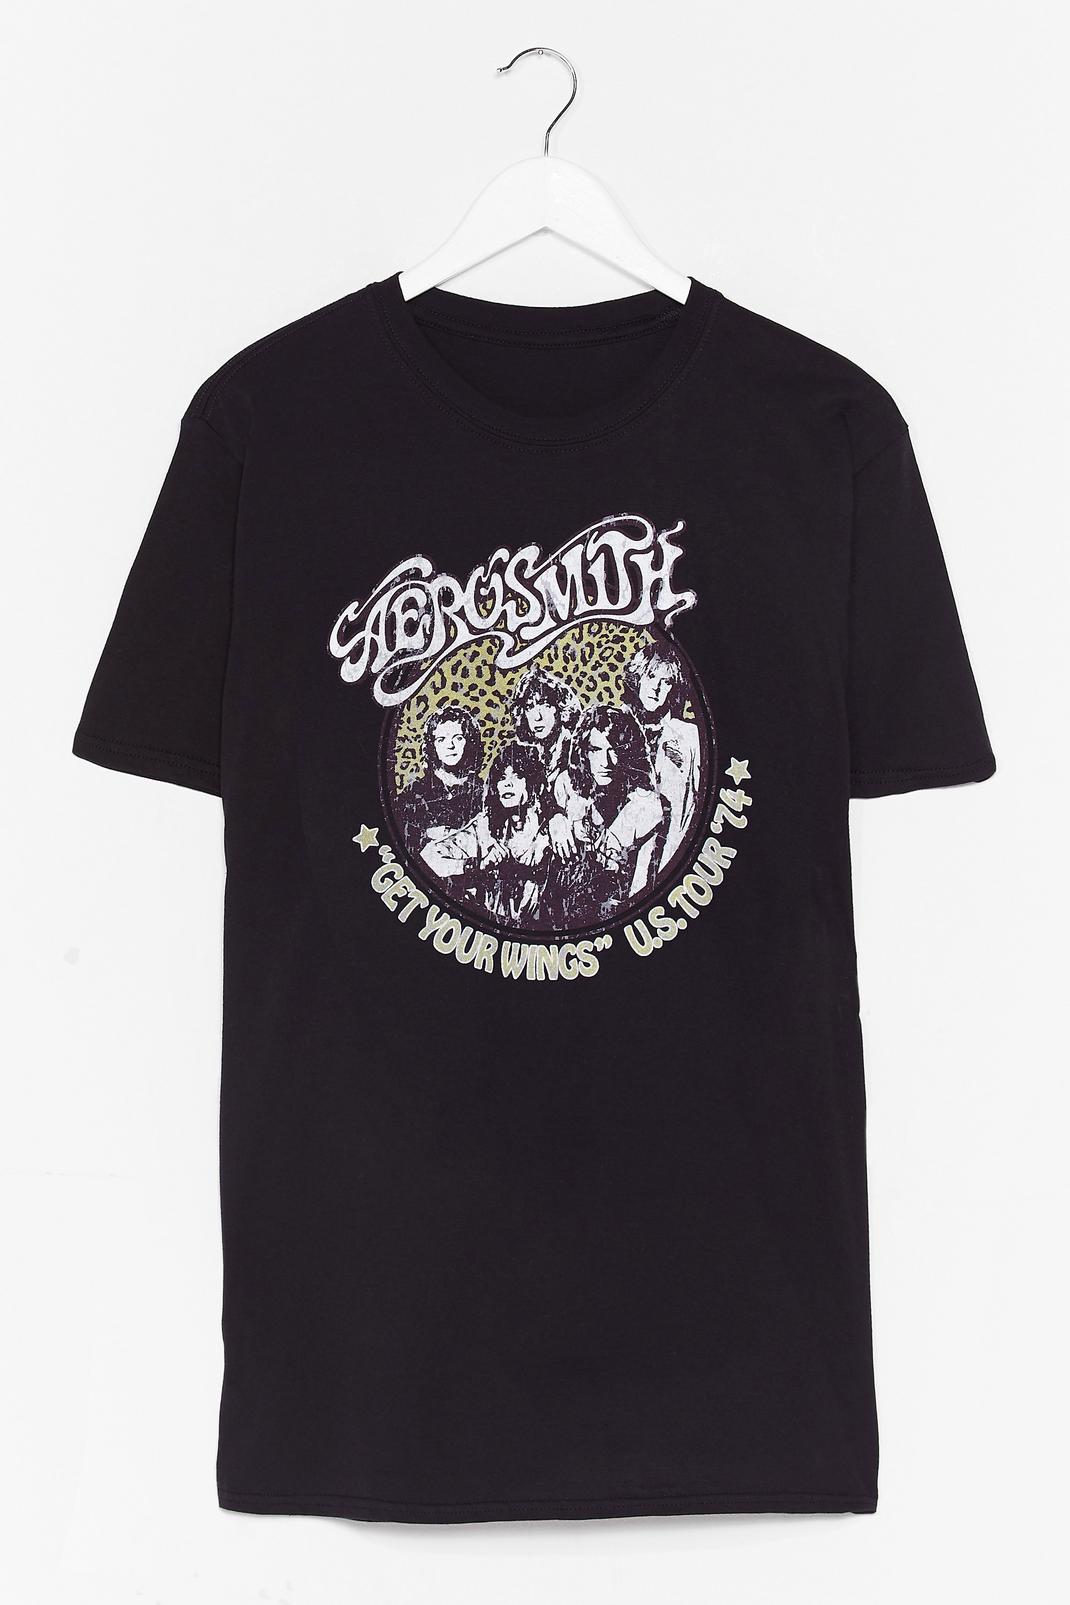 Robe t-shirt de groupe Aerosmith US Tour '74 image number 1